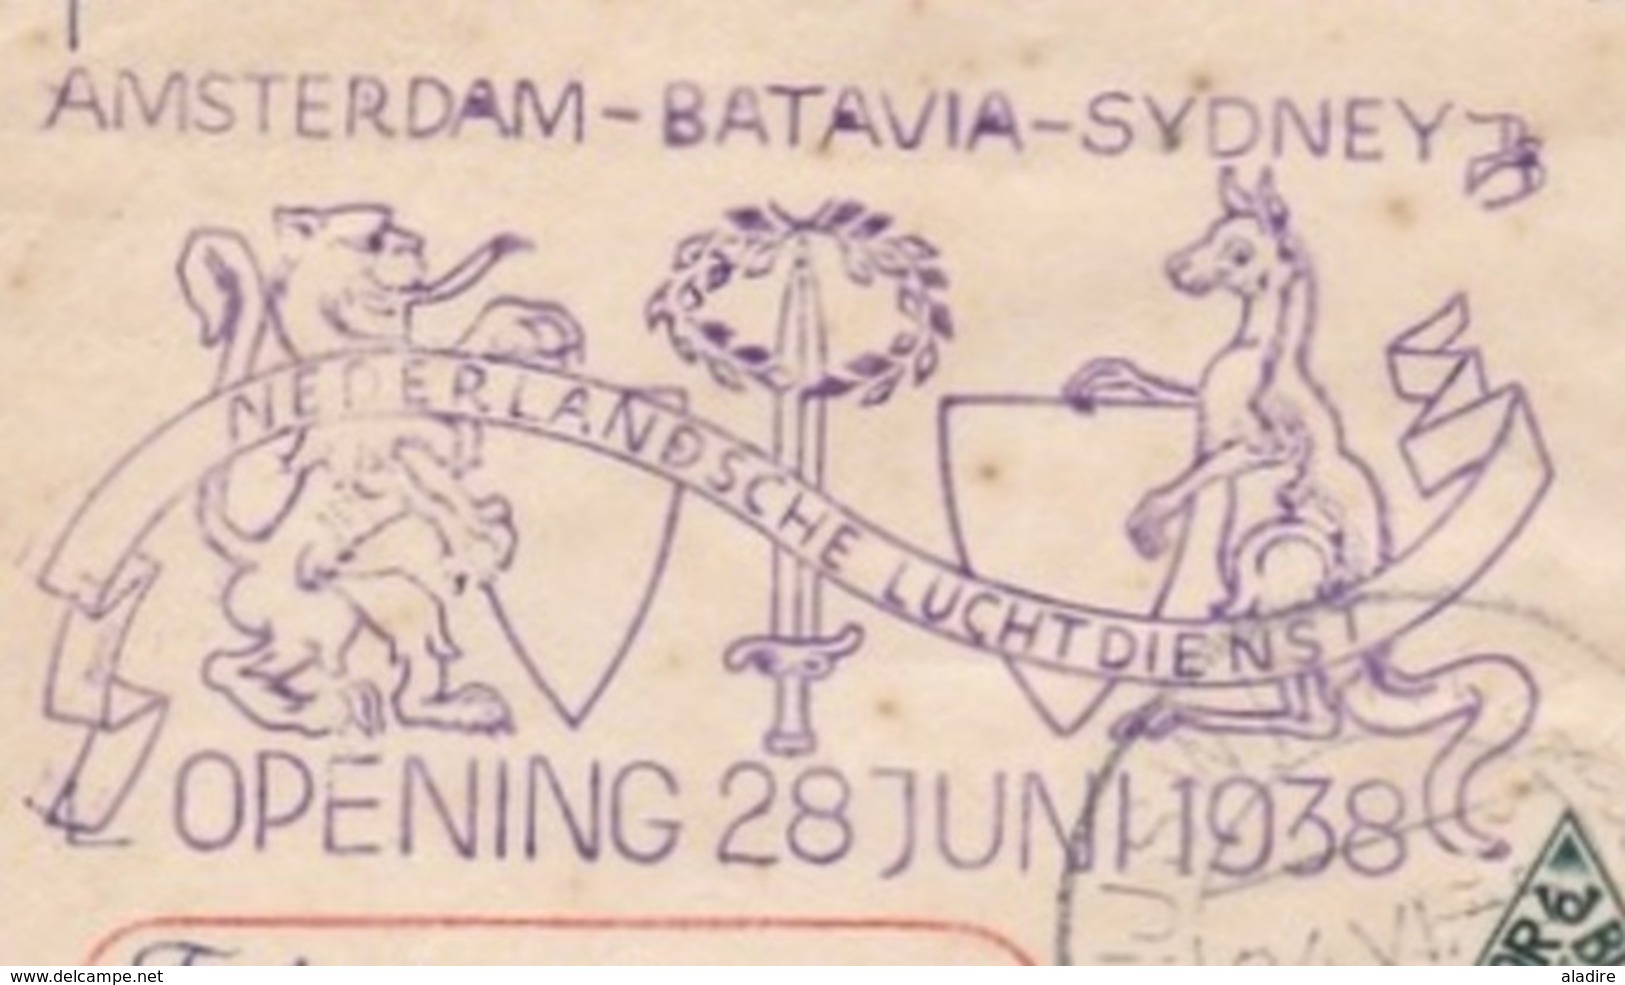 1938 - Raid Aéropostal Amsterdam, Hollande-Batavia, Djakarta, Indonésie - Sydney, Australie ET RETOUR !!! - Poste Aérienne